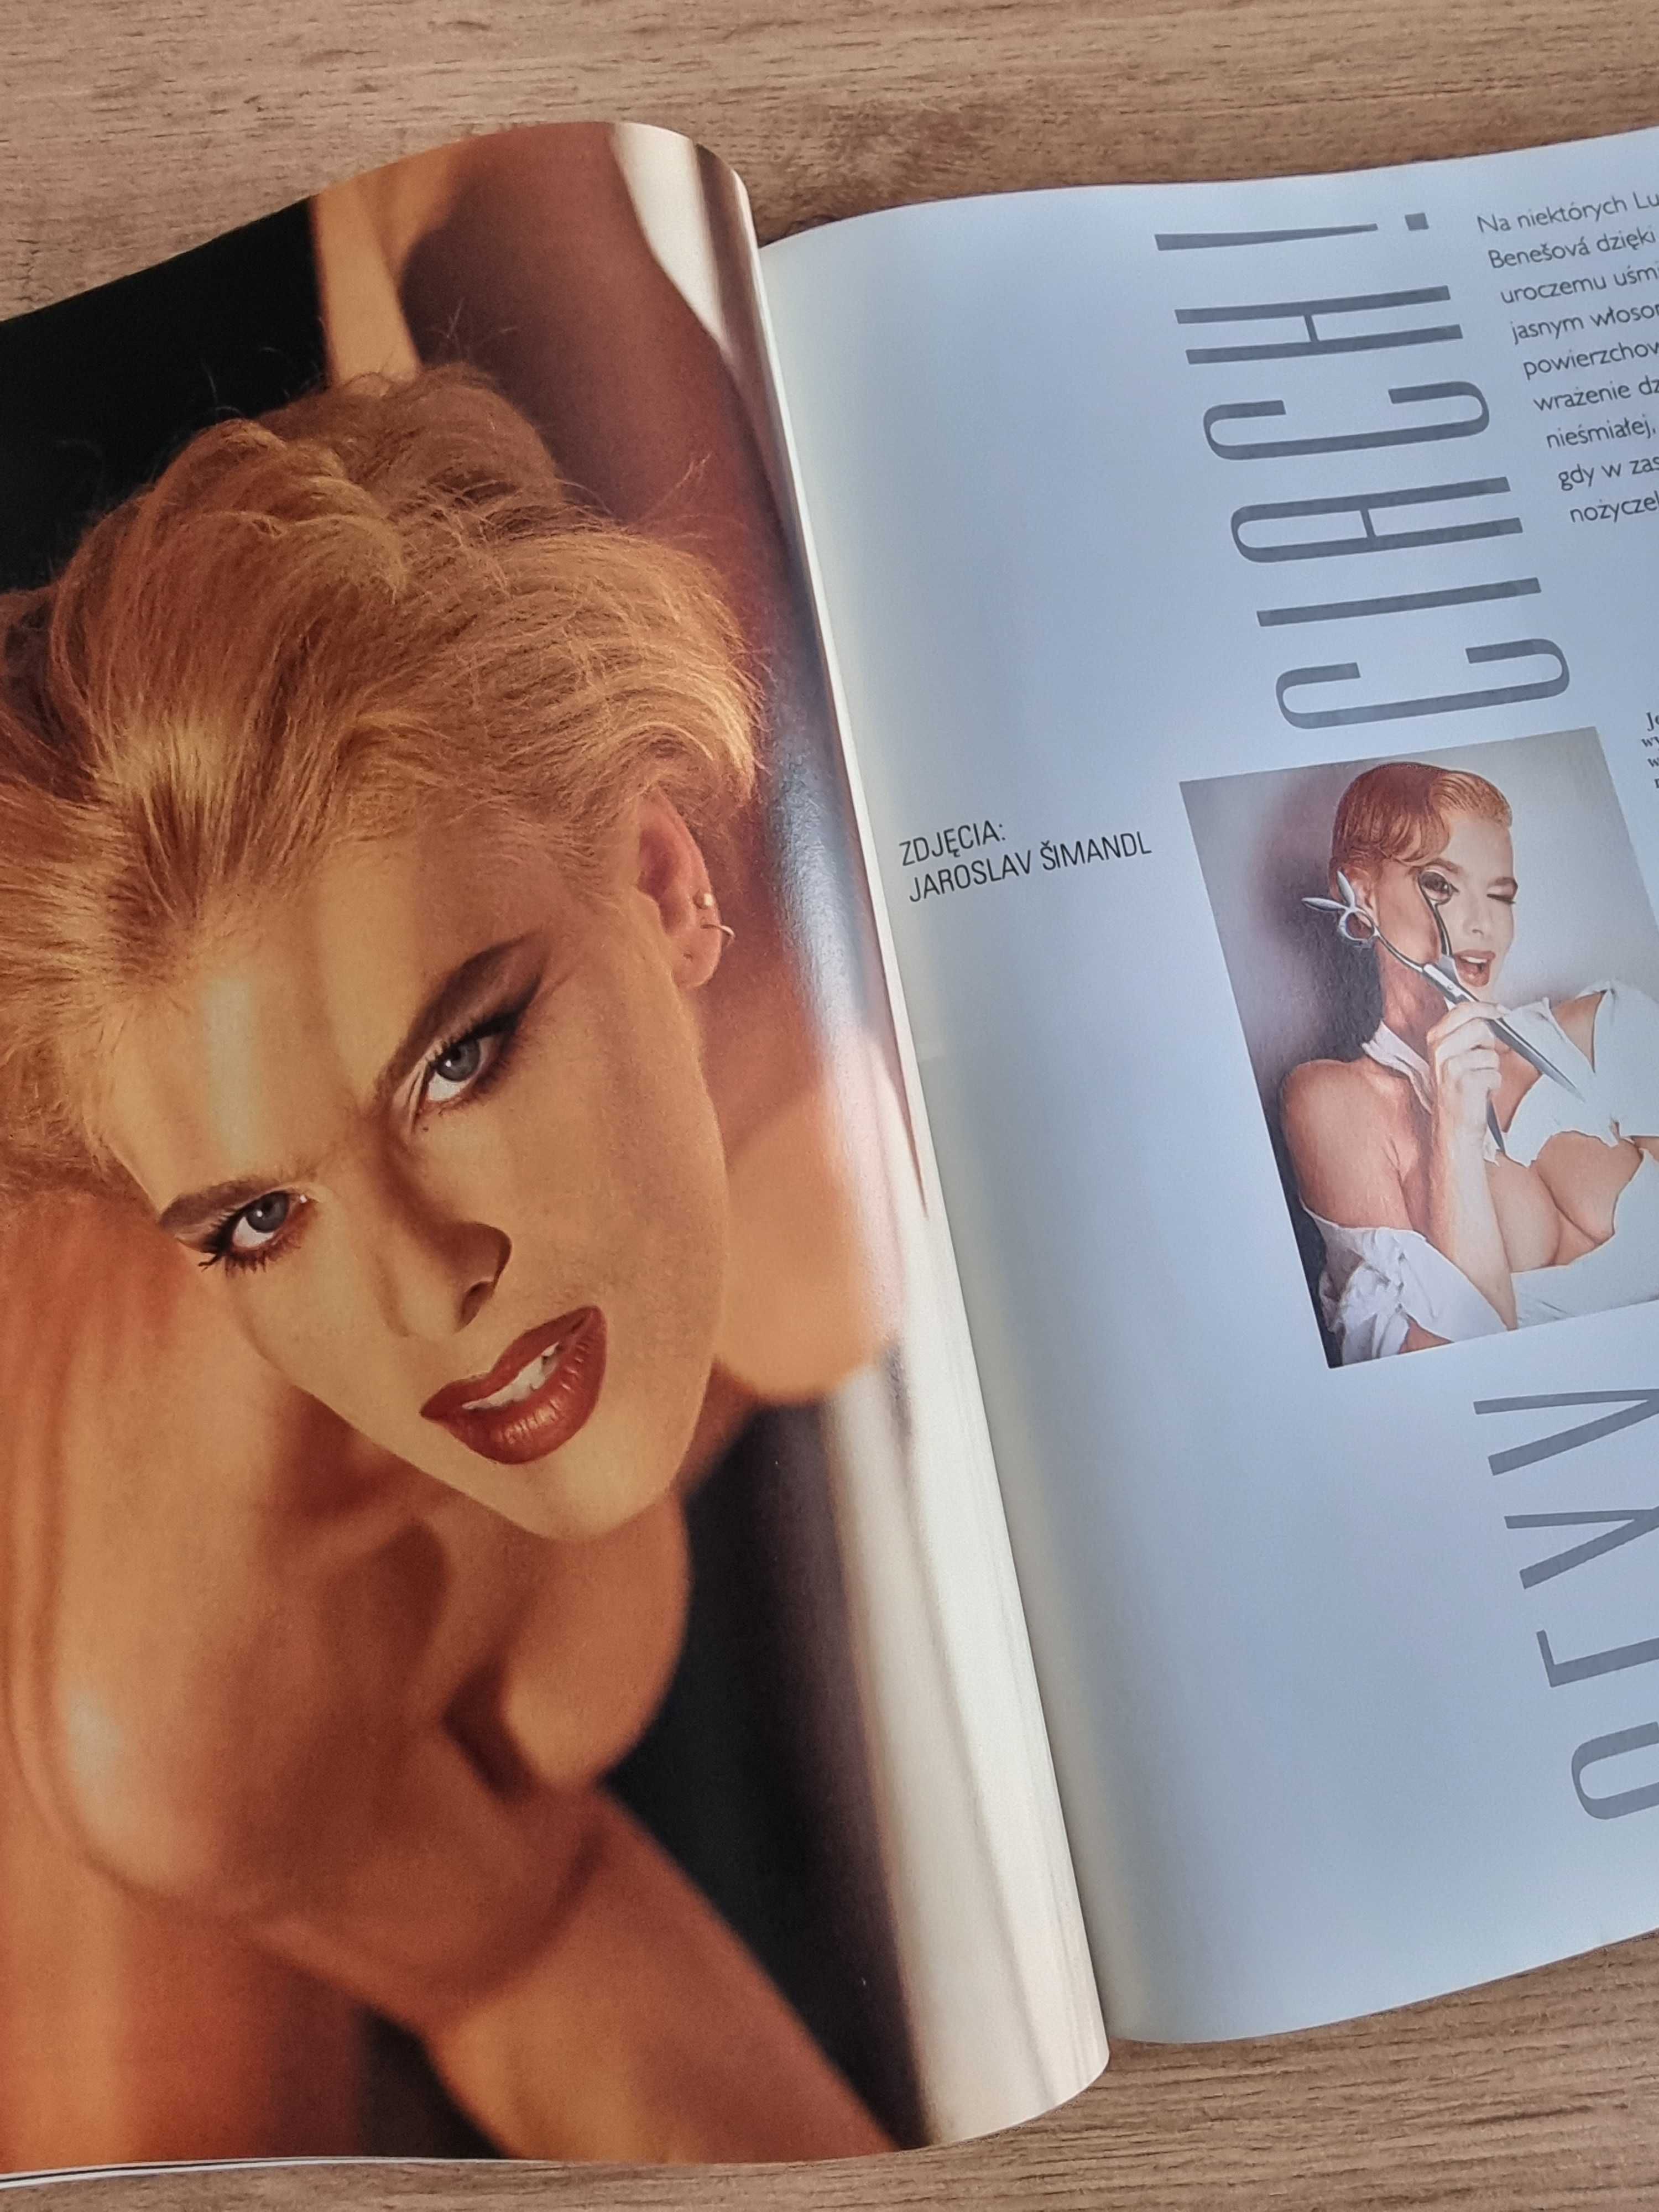 Playboy 1994 - Elan Carter (rozkładówka), Lucie Benesova, Bill Gates